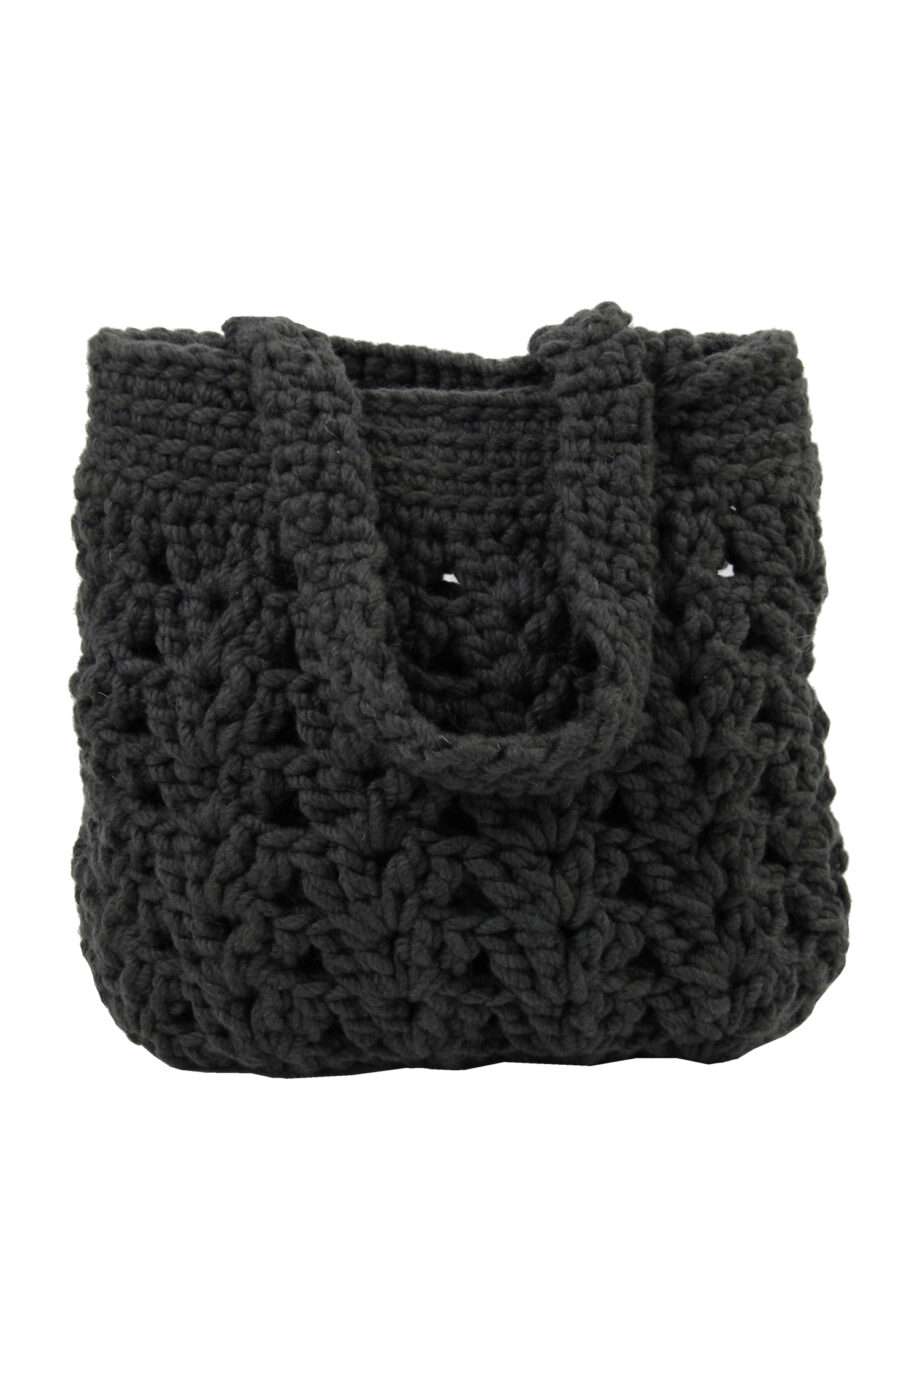 arab anthracite crochet woolen bag